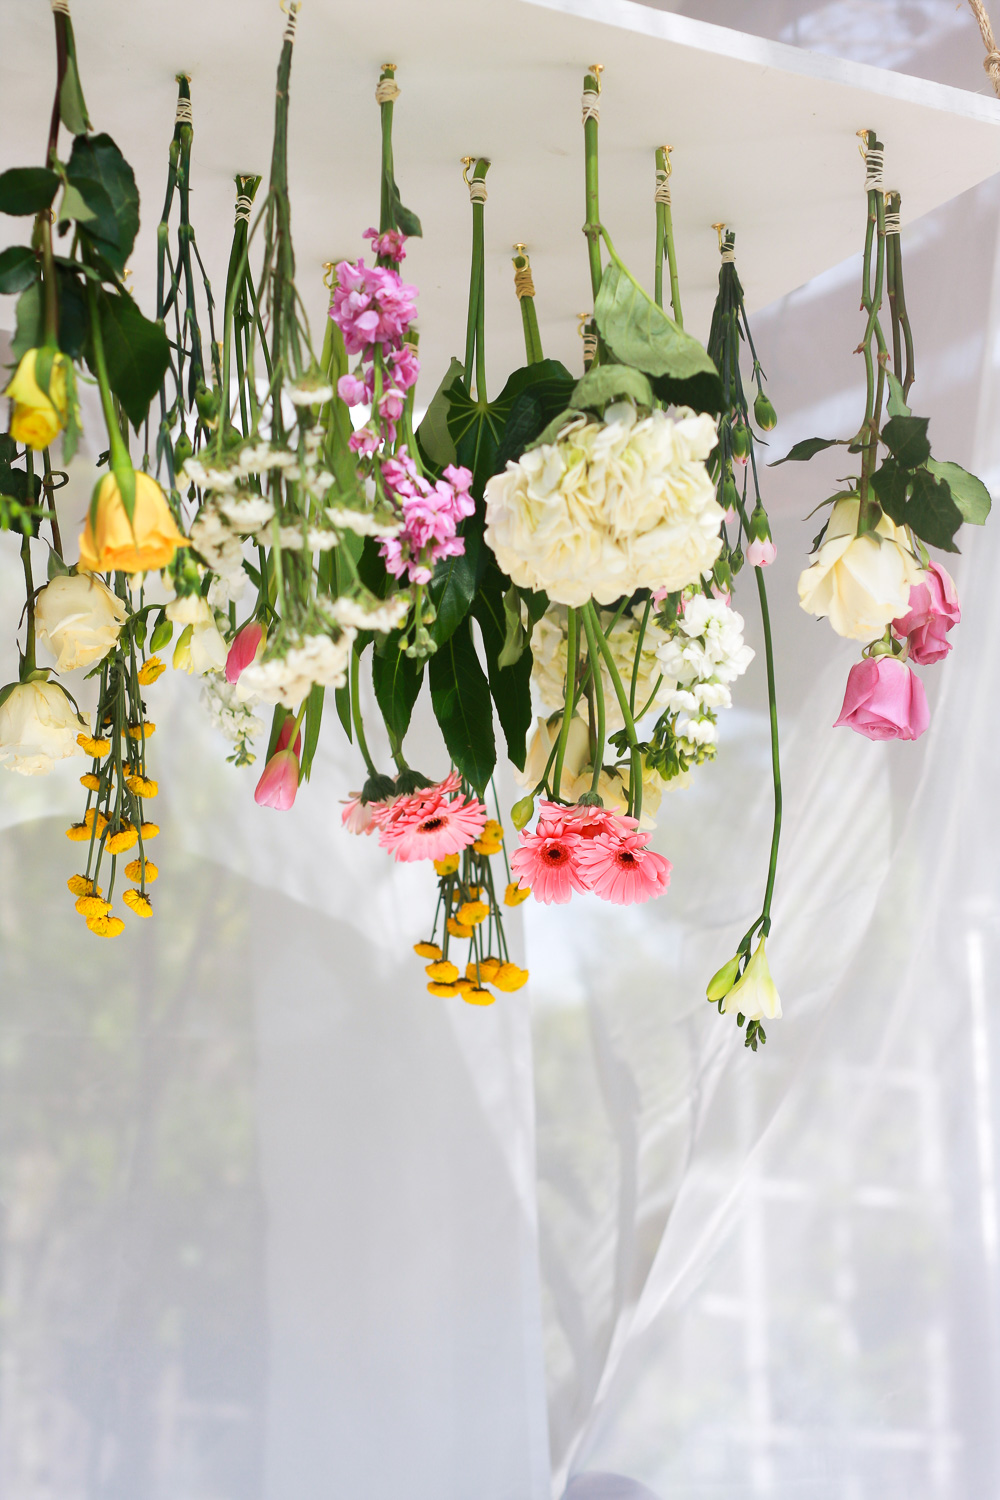 Hanging Flowers Decoration - Jest Cafe